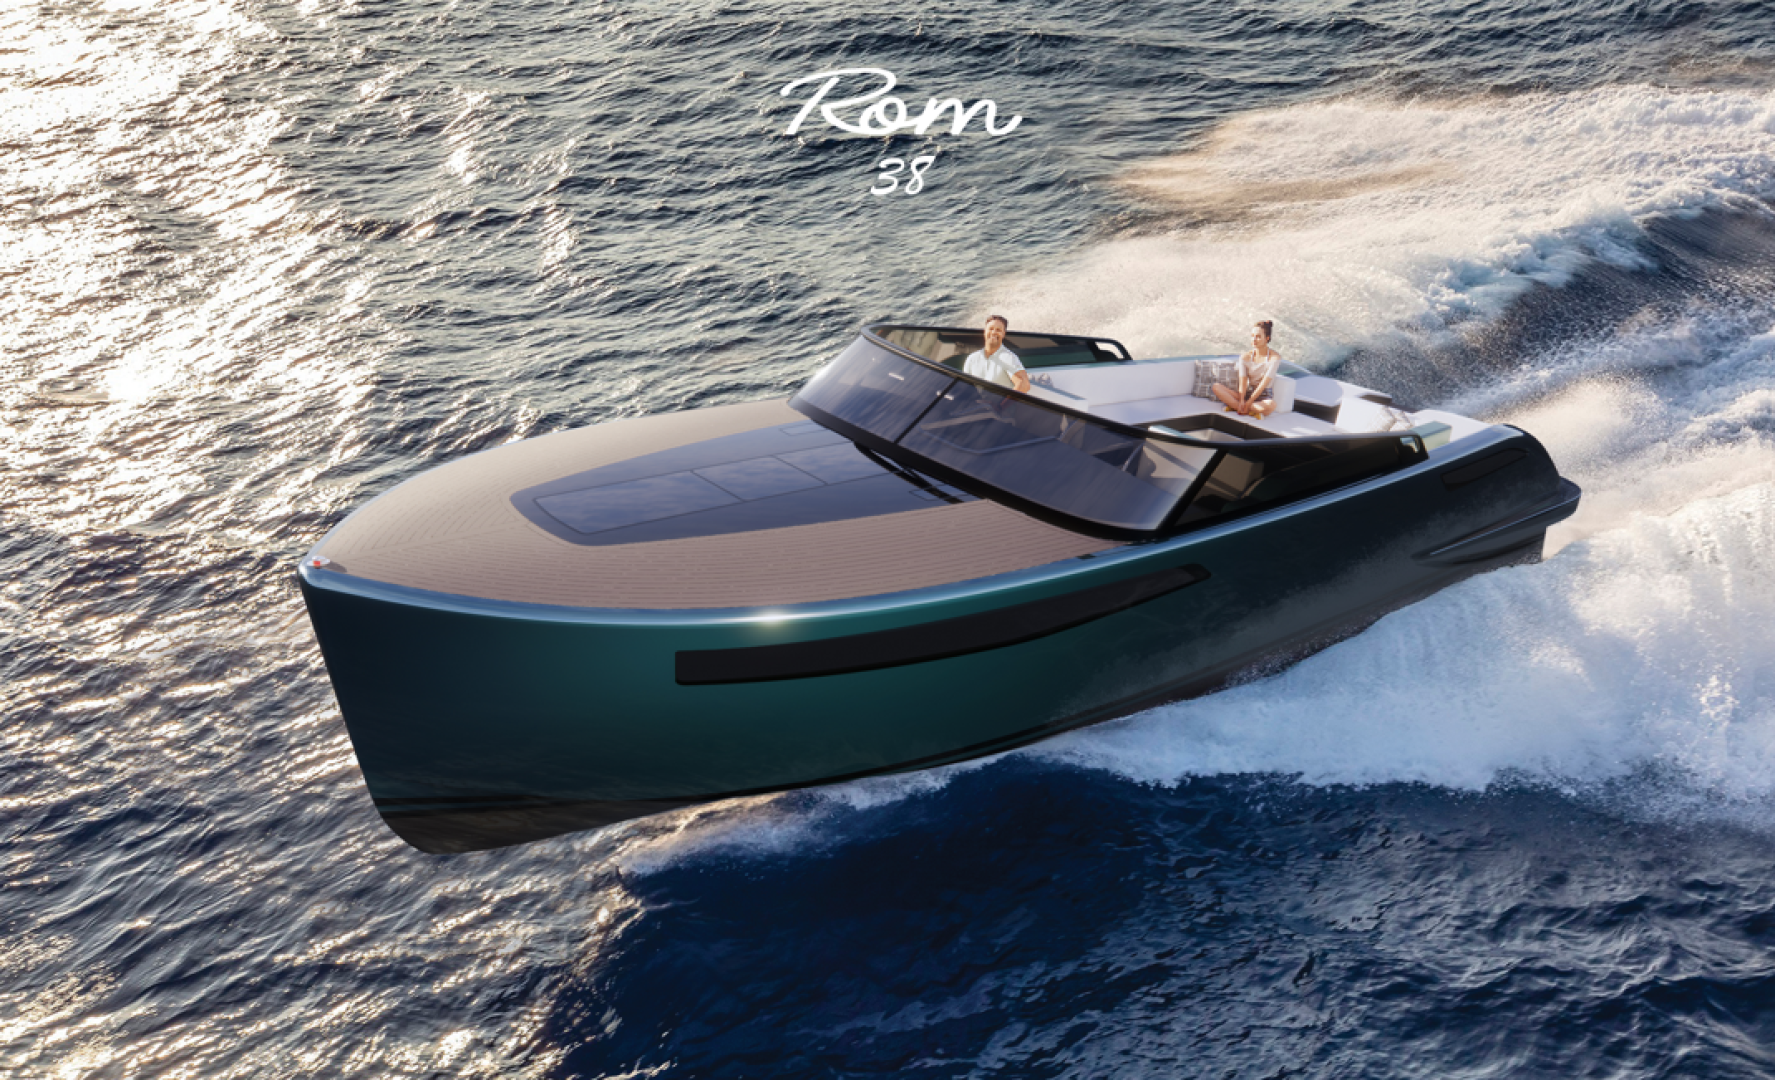 Rom 38 powerboat: sleek and powerful